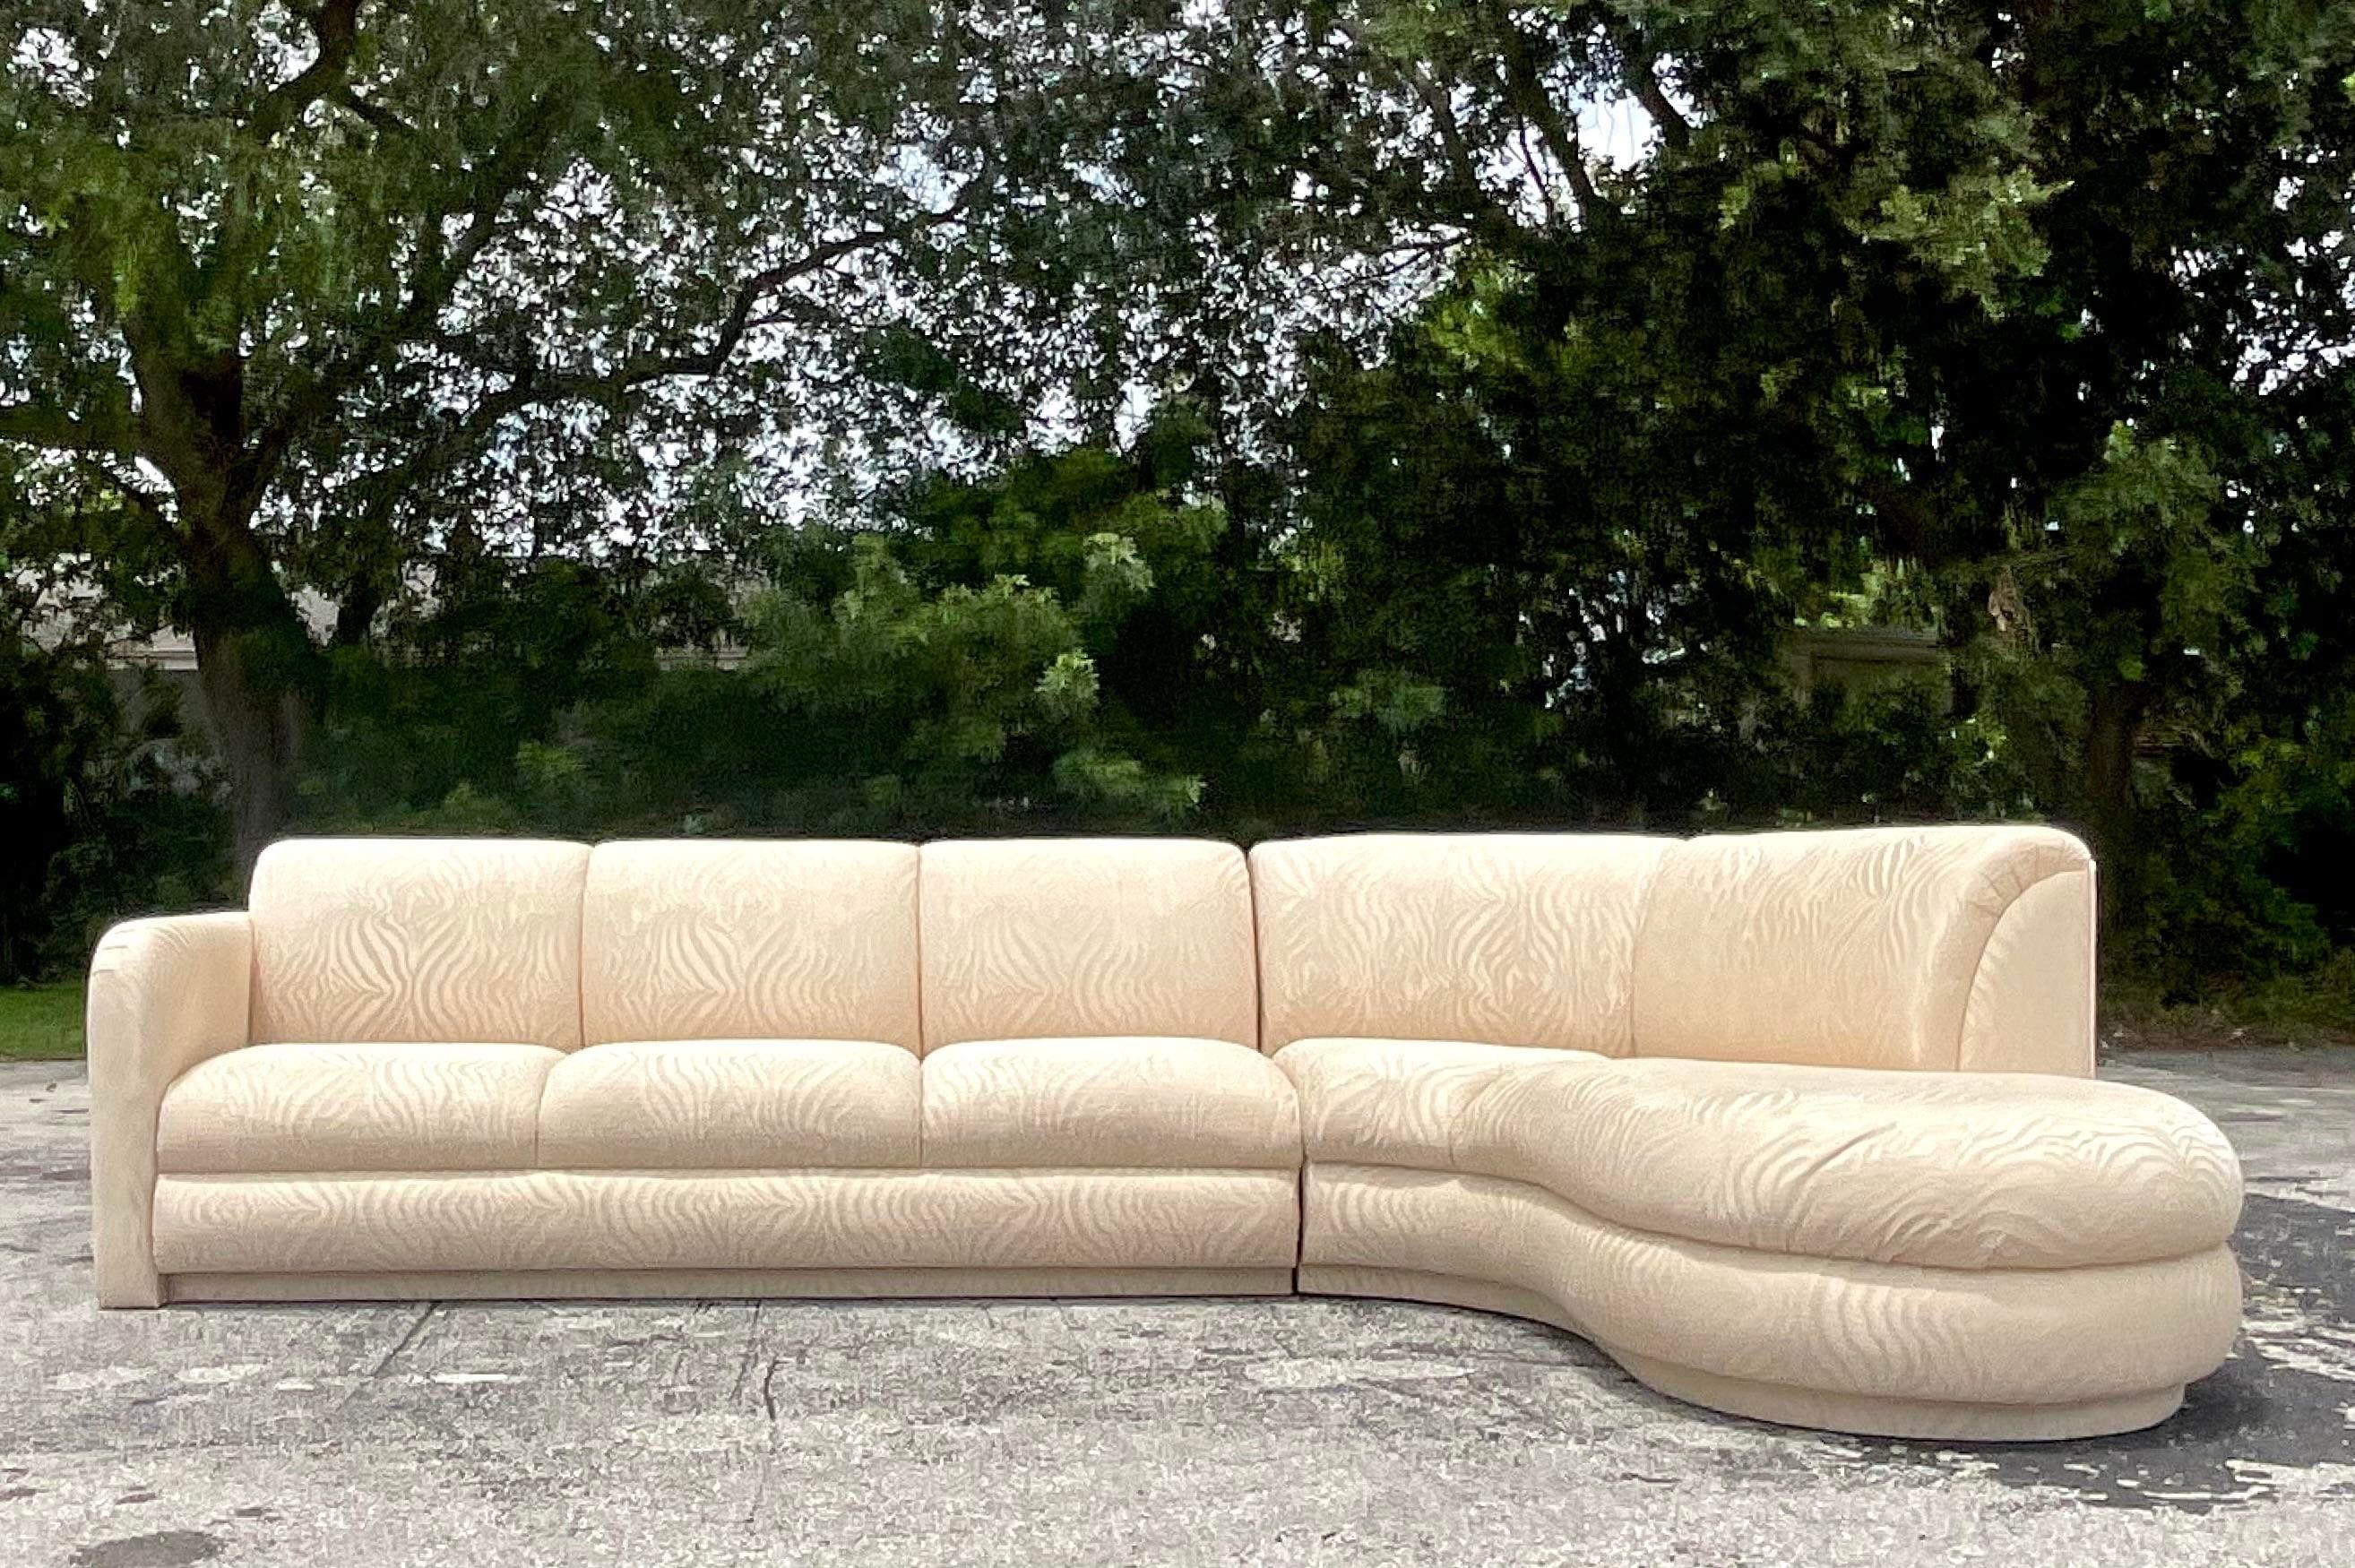 Fabric Vintage Boho Zebra Jacquard Biomorphic Sectional Sofa For Sale